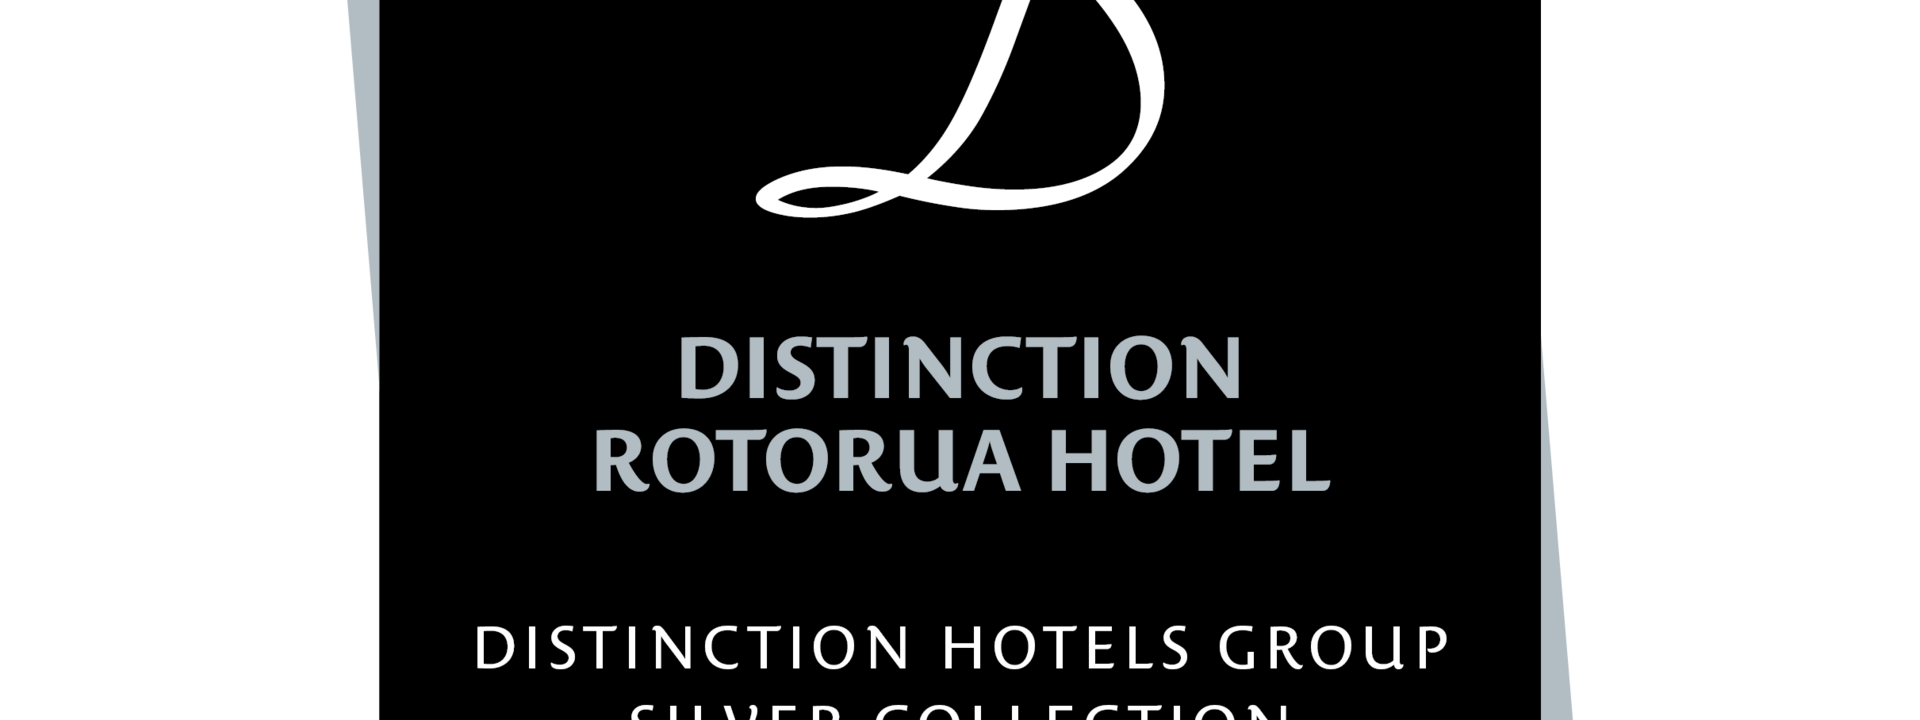 Distinction Rotorua Hotel  Logo4 PNG.png